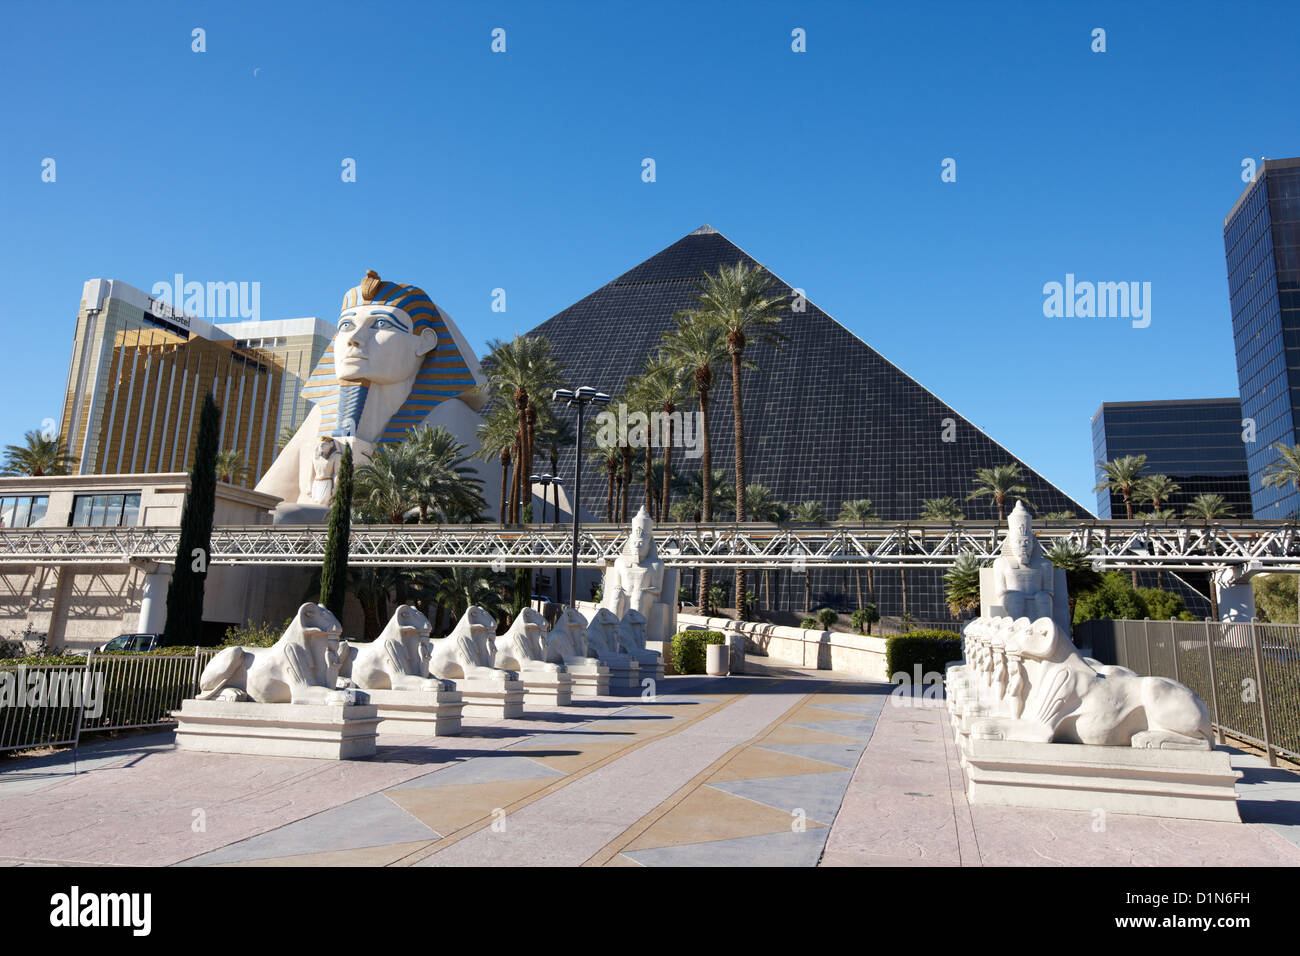 Luxor las vegas fotografías e imágenes de alta resolución - Alamy